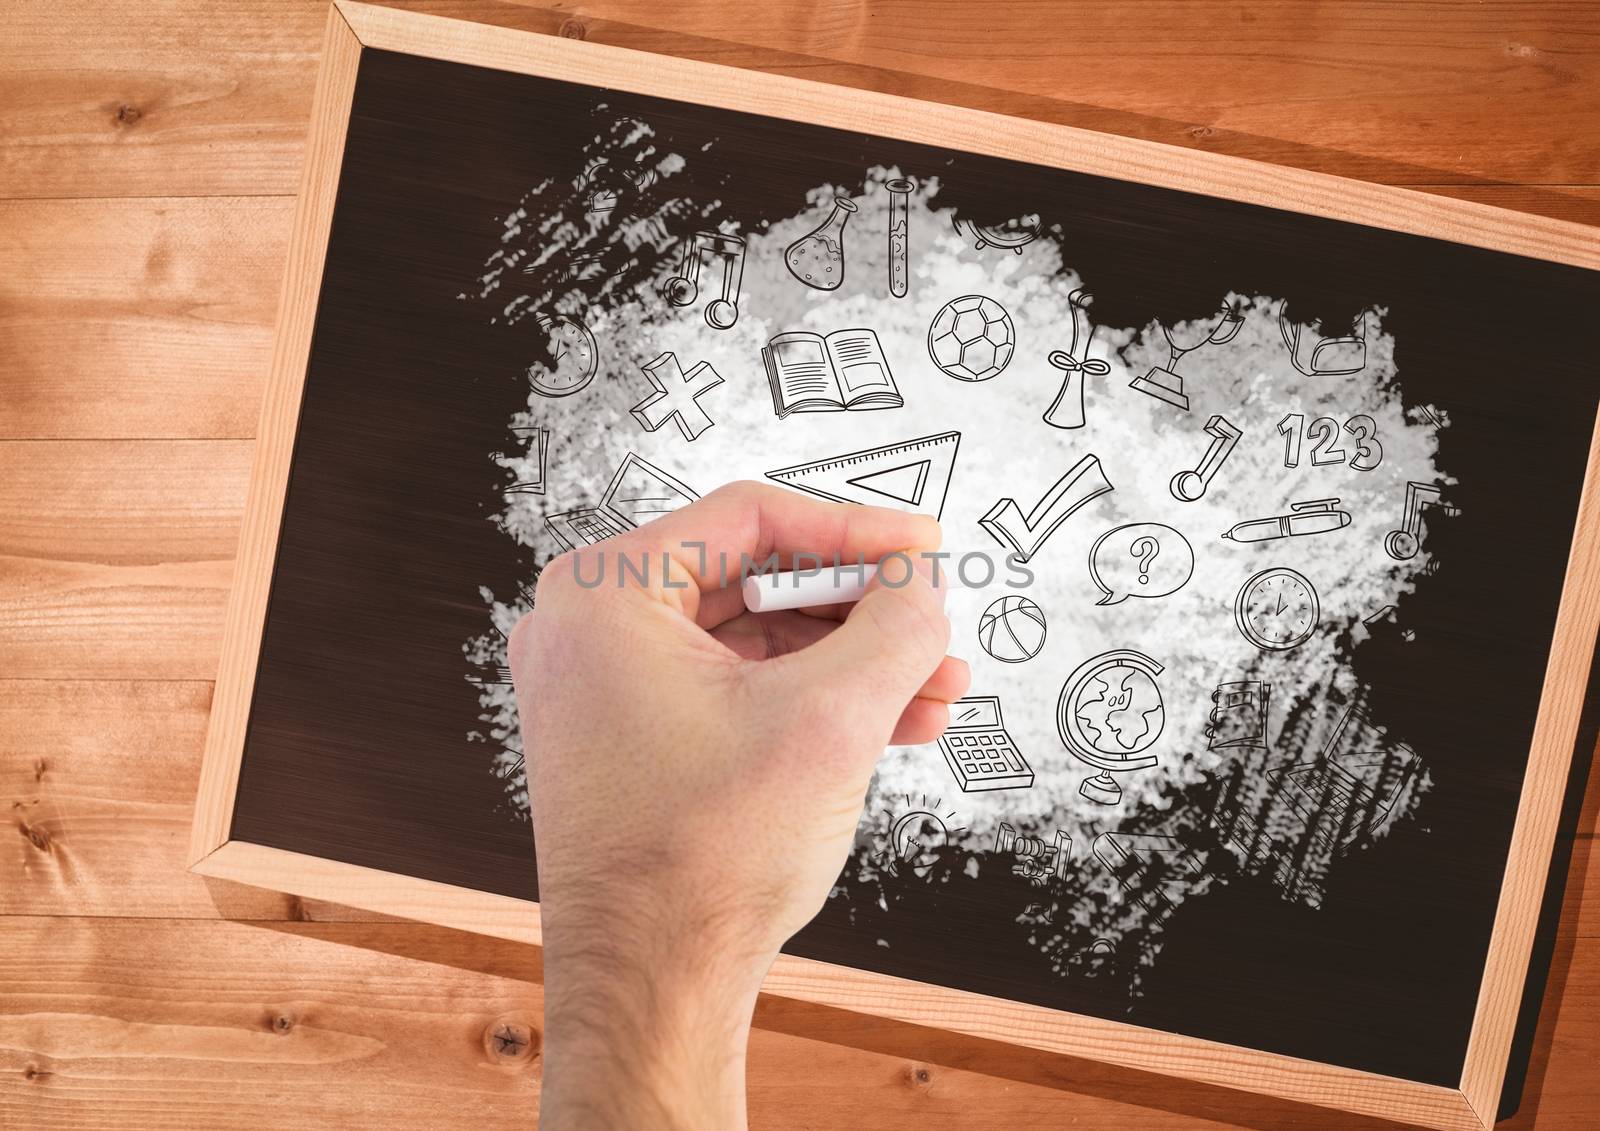 Hand drawing education graphics on blackboard by Wavebreakmedia